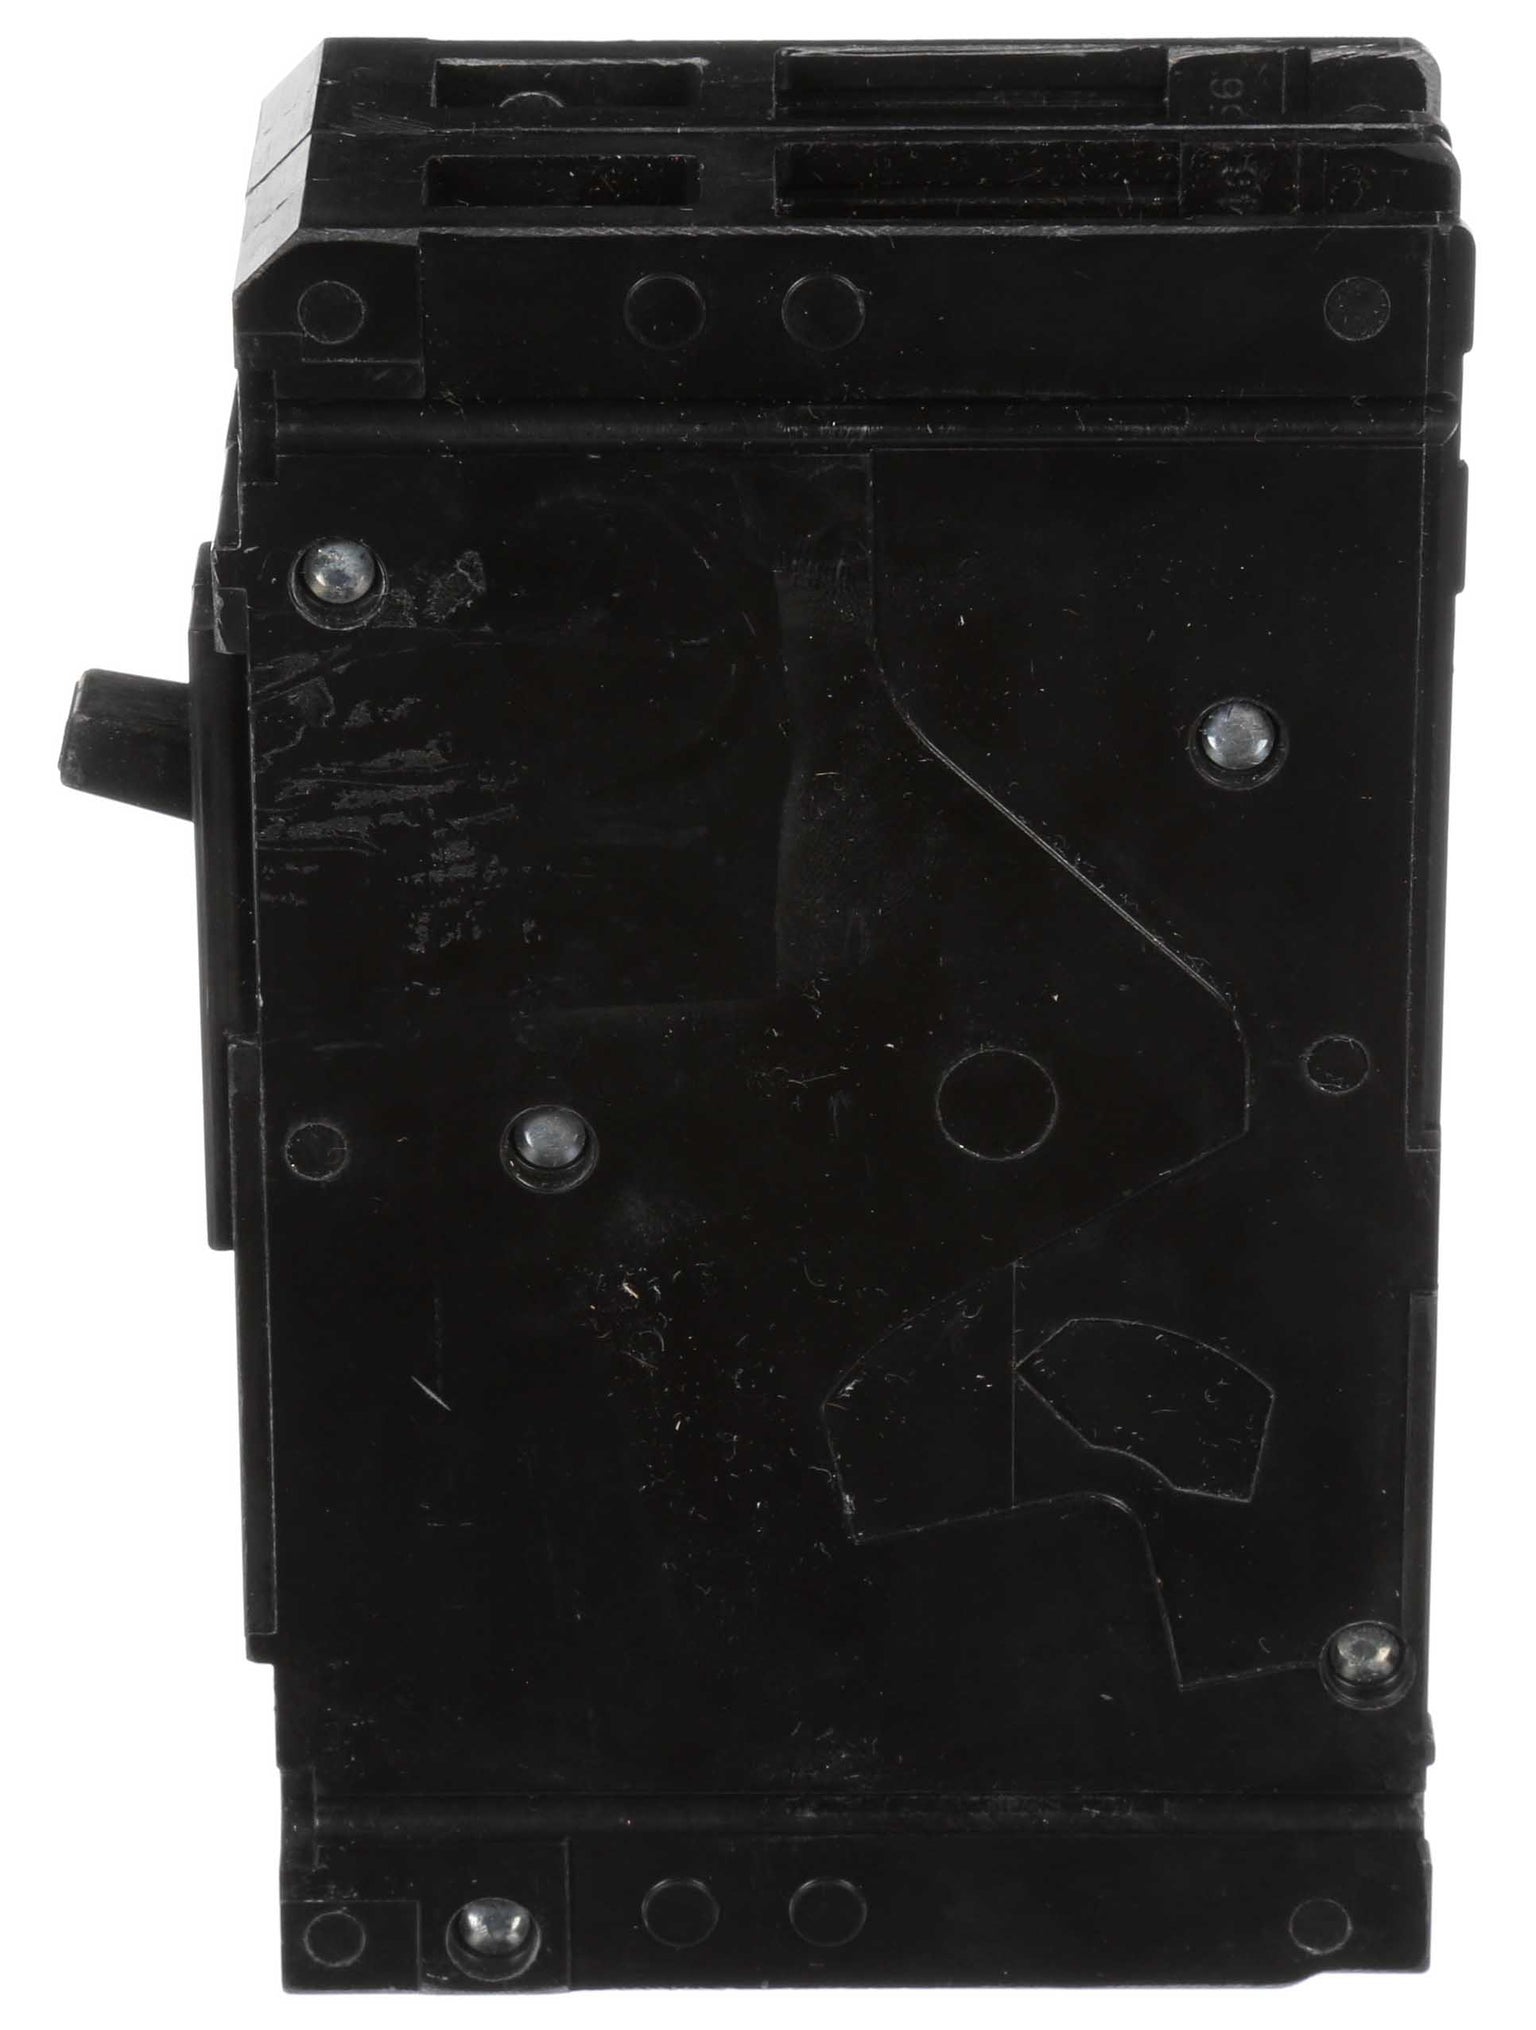 ED22B080 - Siemens - Molded Case Circuit Breaker